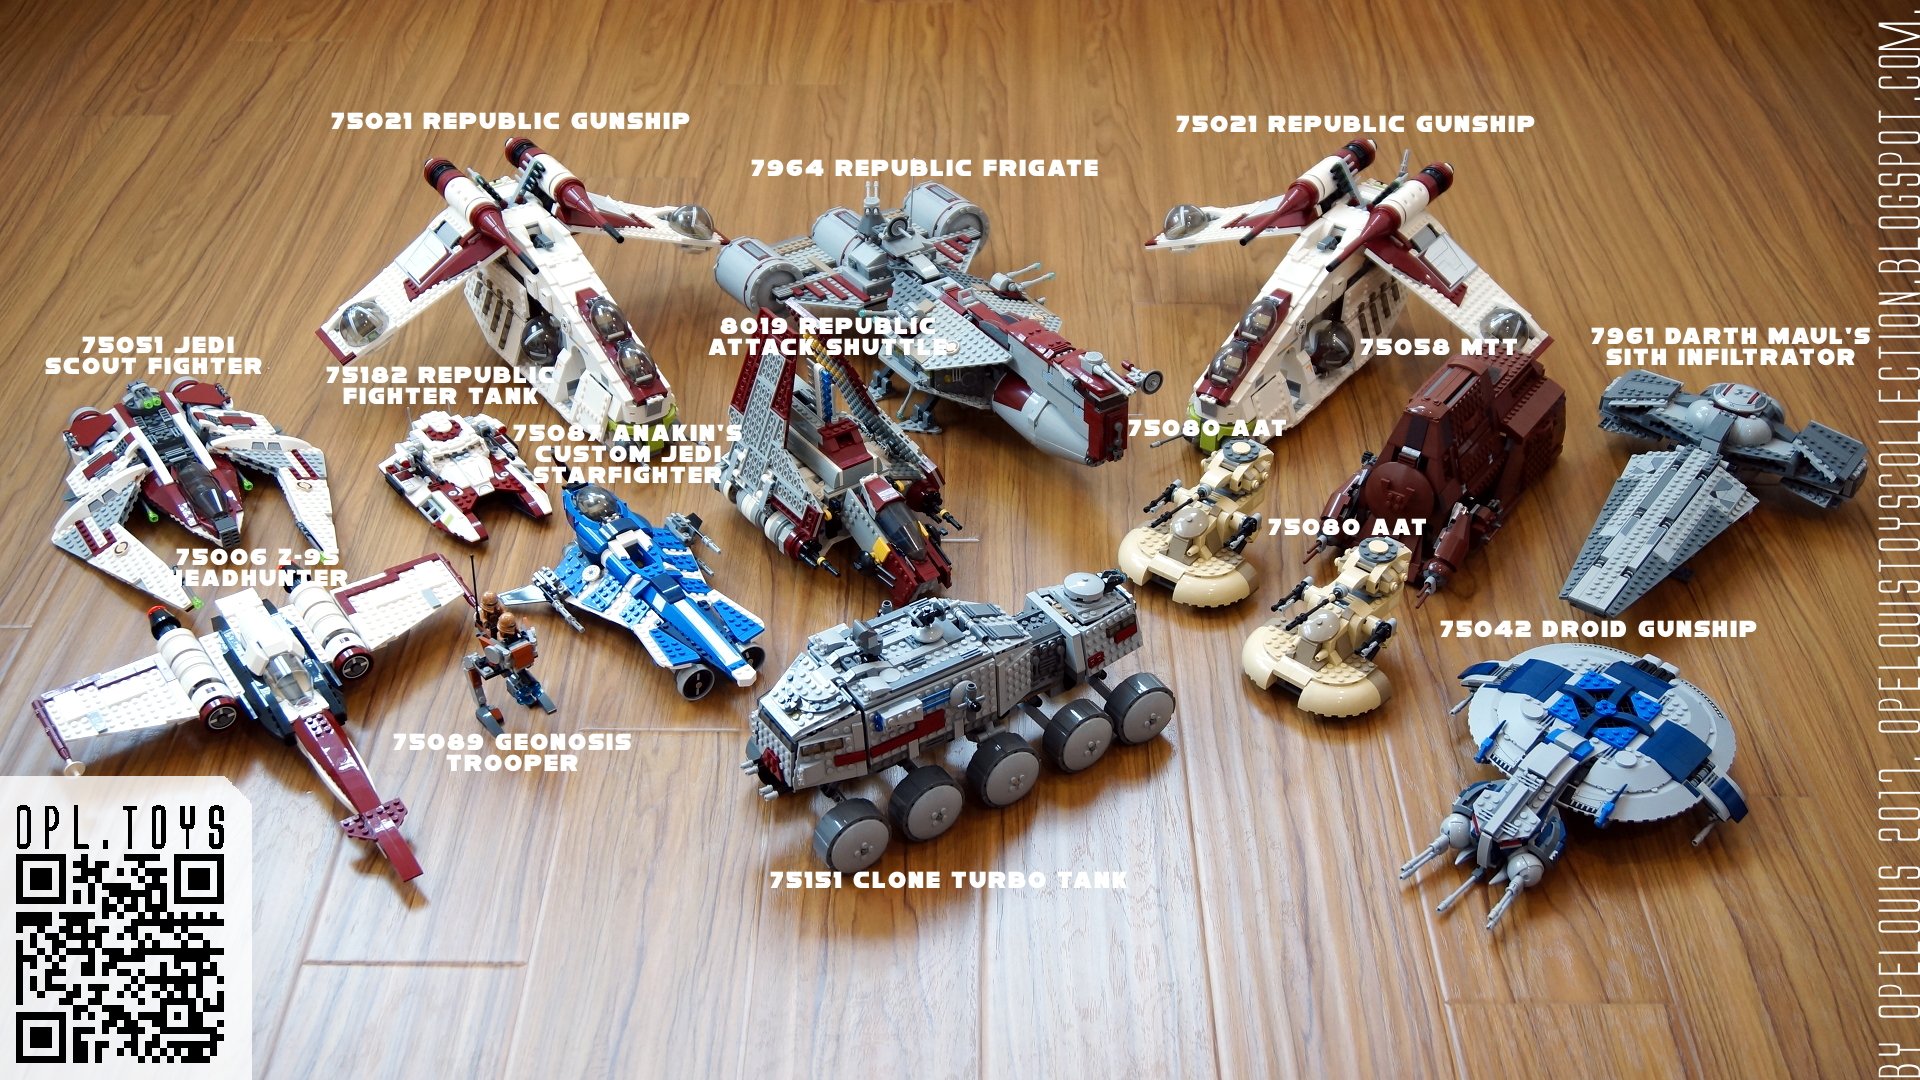 Opelouis on Twitter: "Lego Star Wars 75151 Clone Turbo Tank. #LEGO #Juggernaut Click below link for pics: https://t.co/z4IwR8yxCb https://t.co/3TltEqkB9h" / Twitter